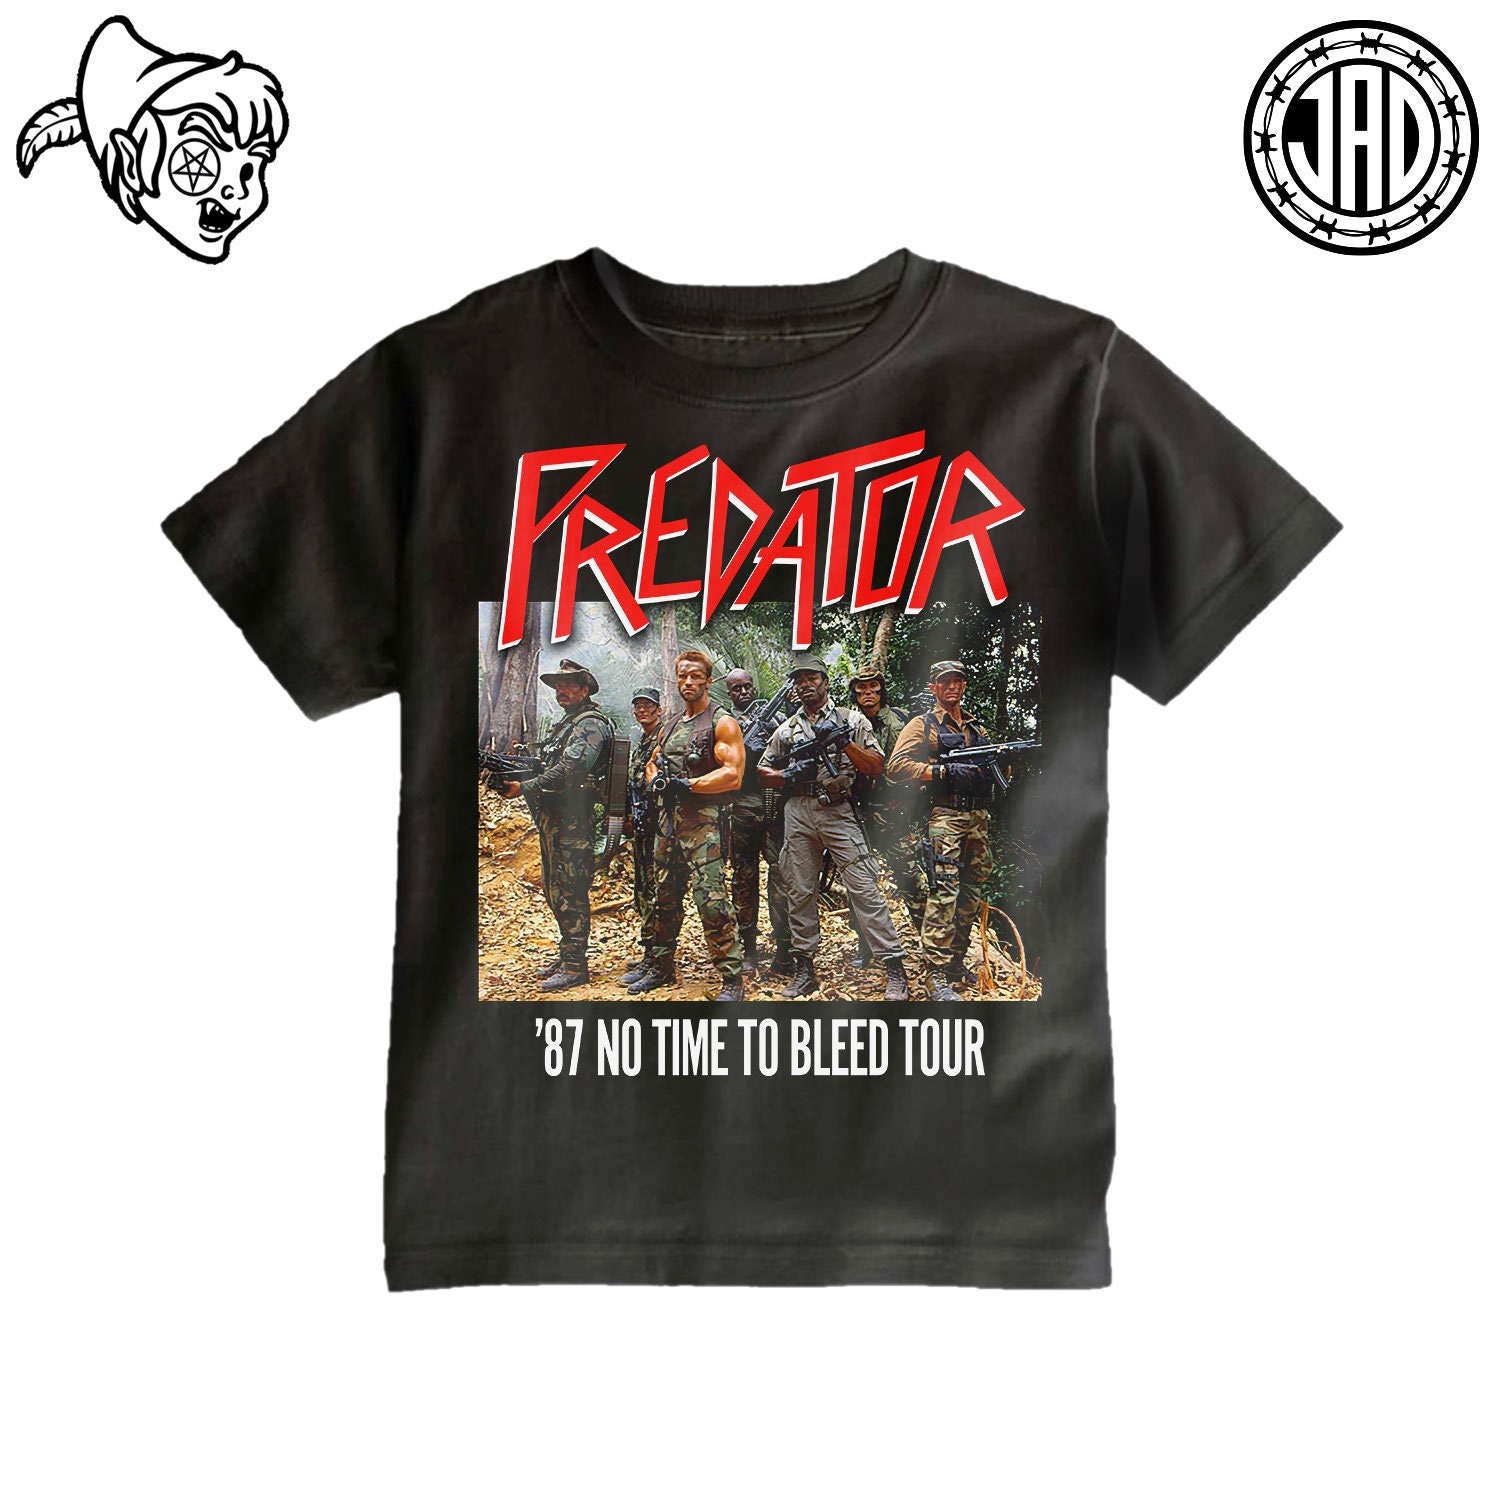 Predator I Aint Got Time To Bleed | Essential T-Shirt